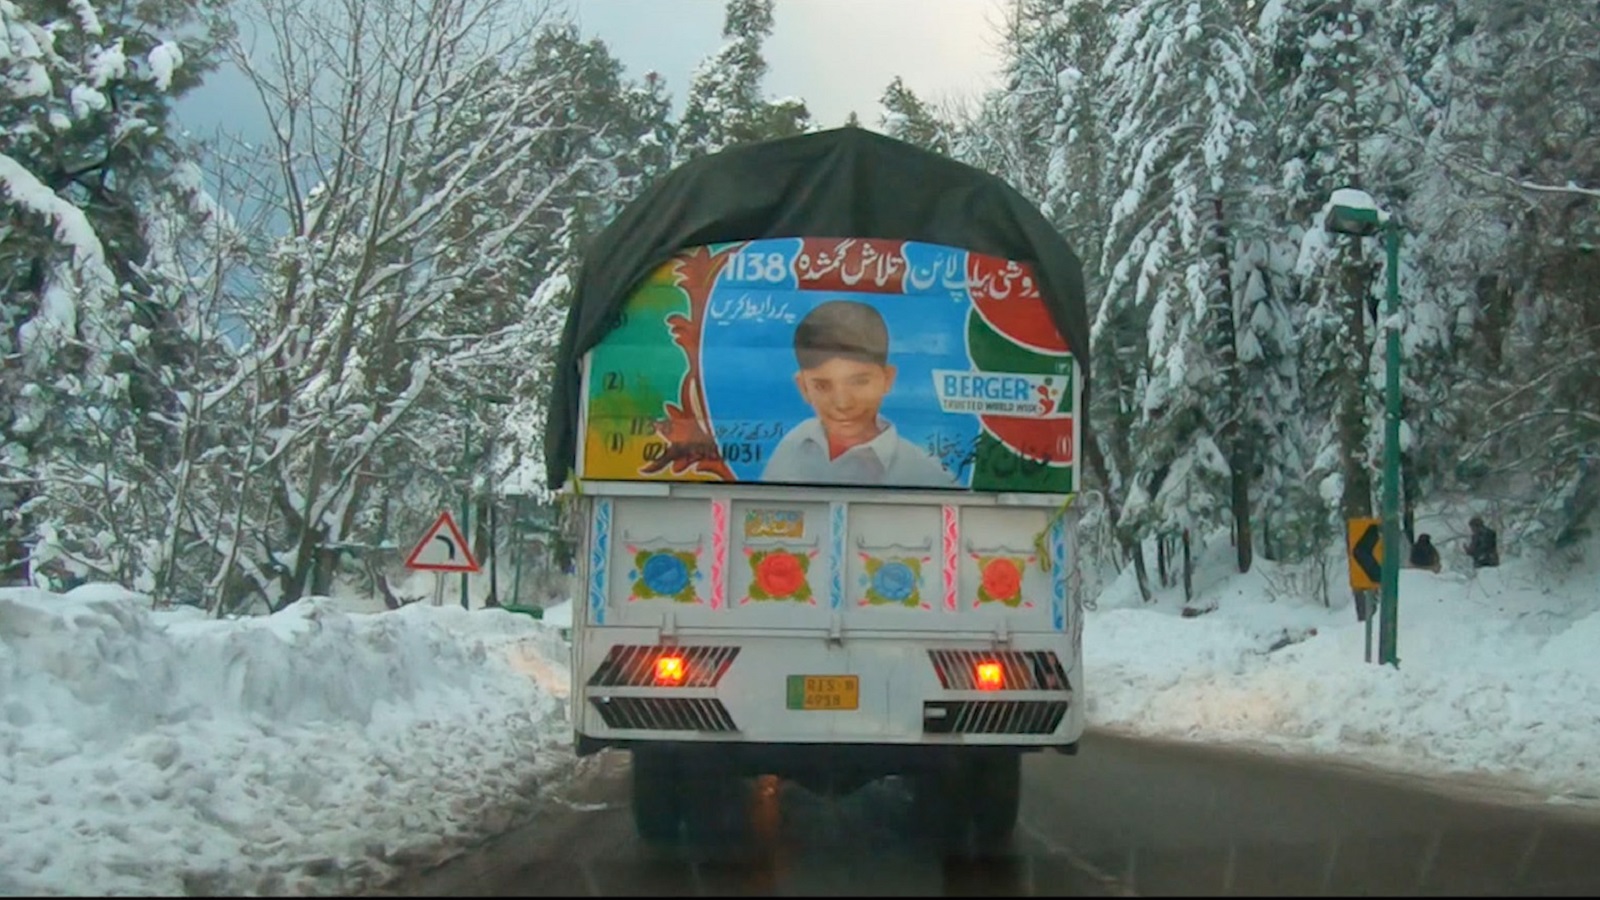 Traditional Pakistani Trucks Transformed to Locate Missing Kids